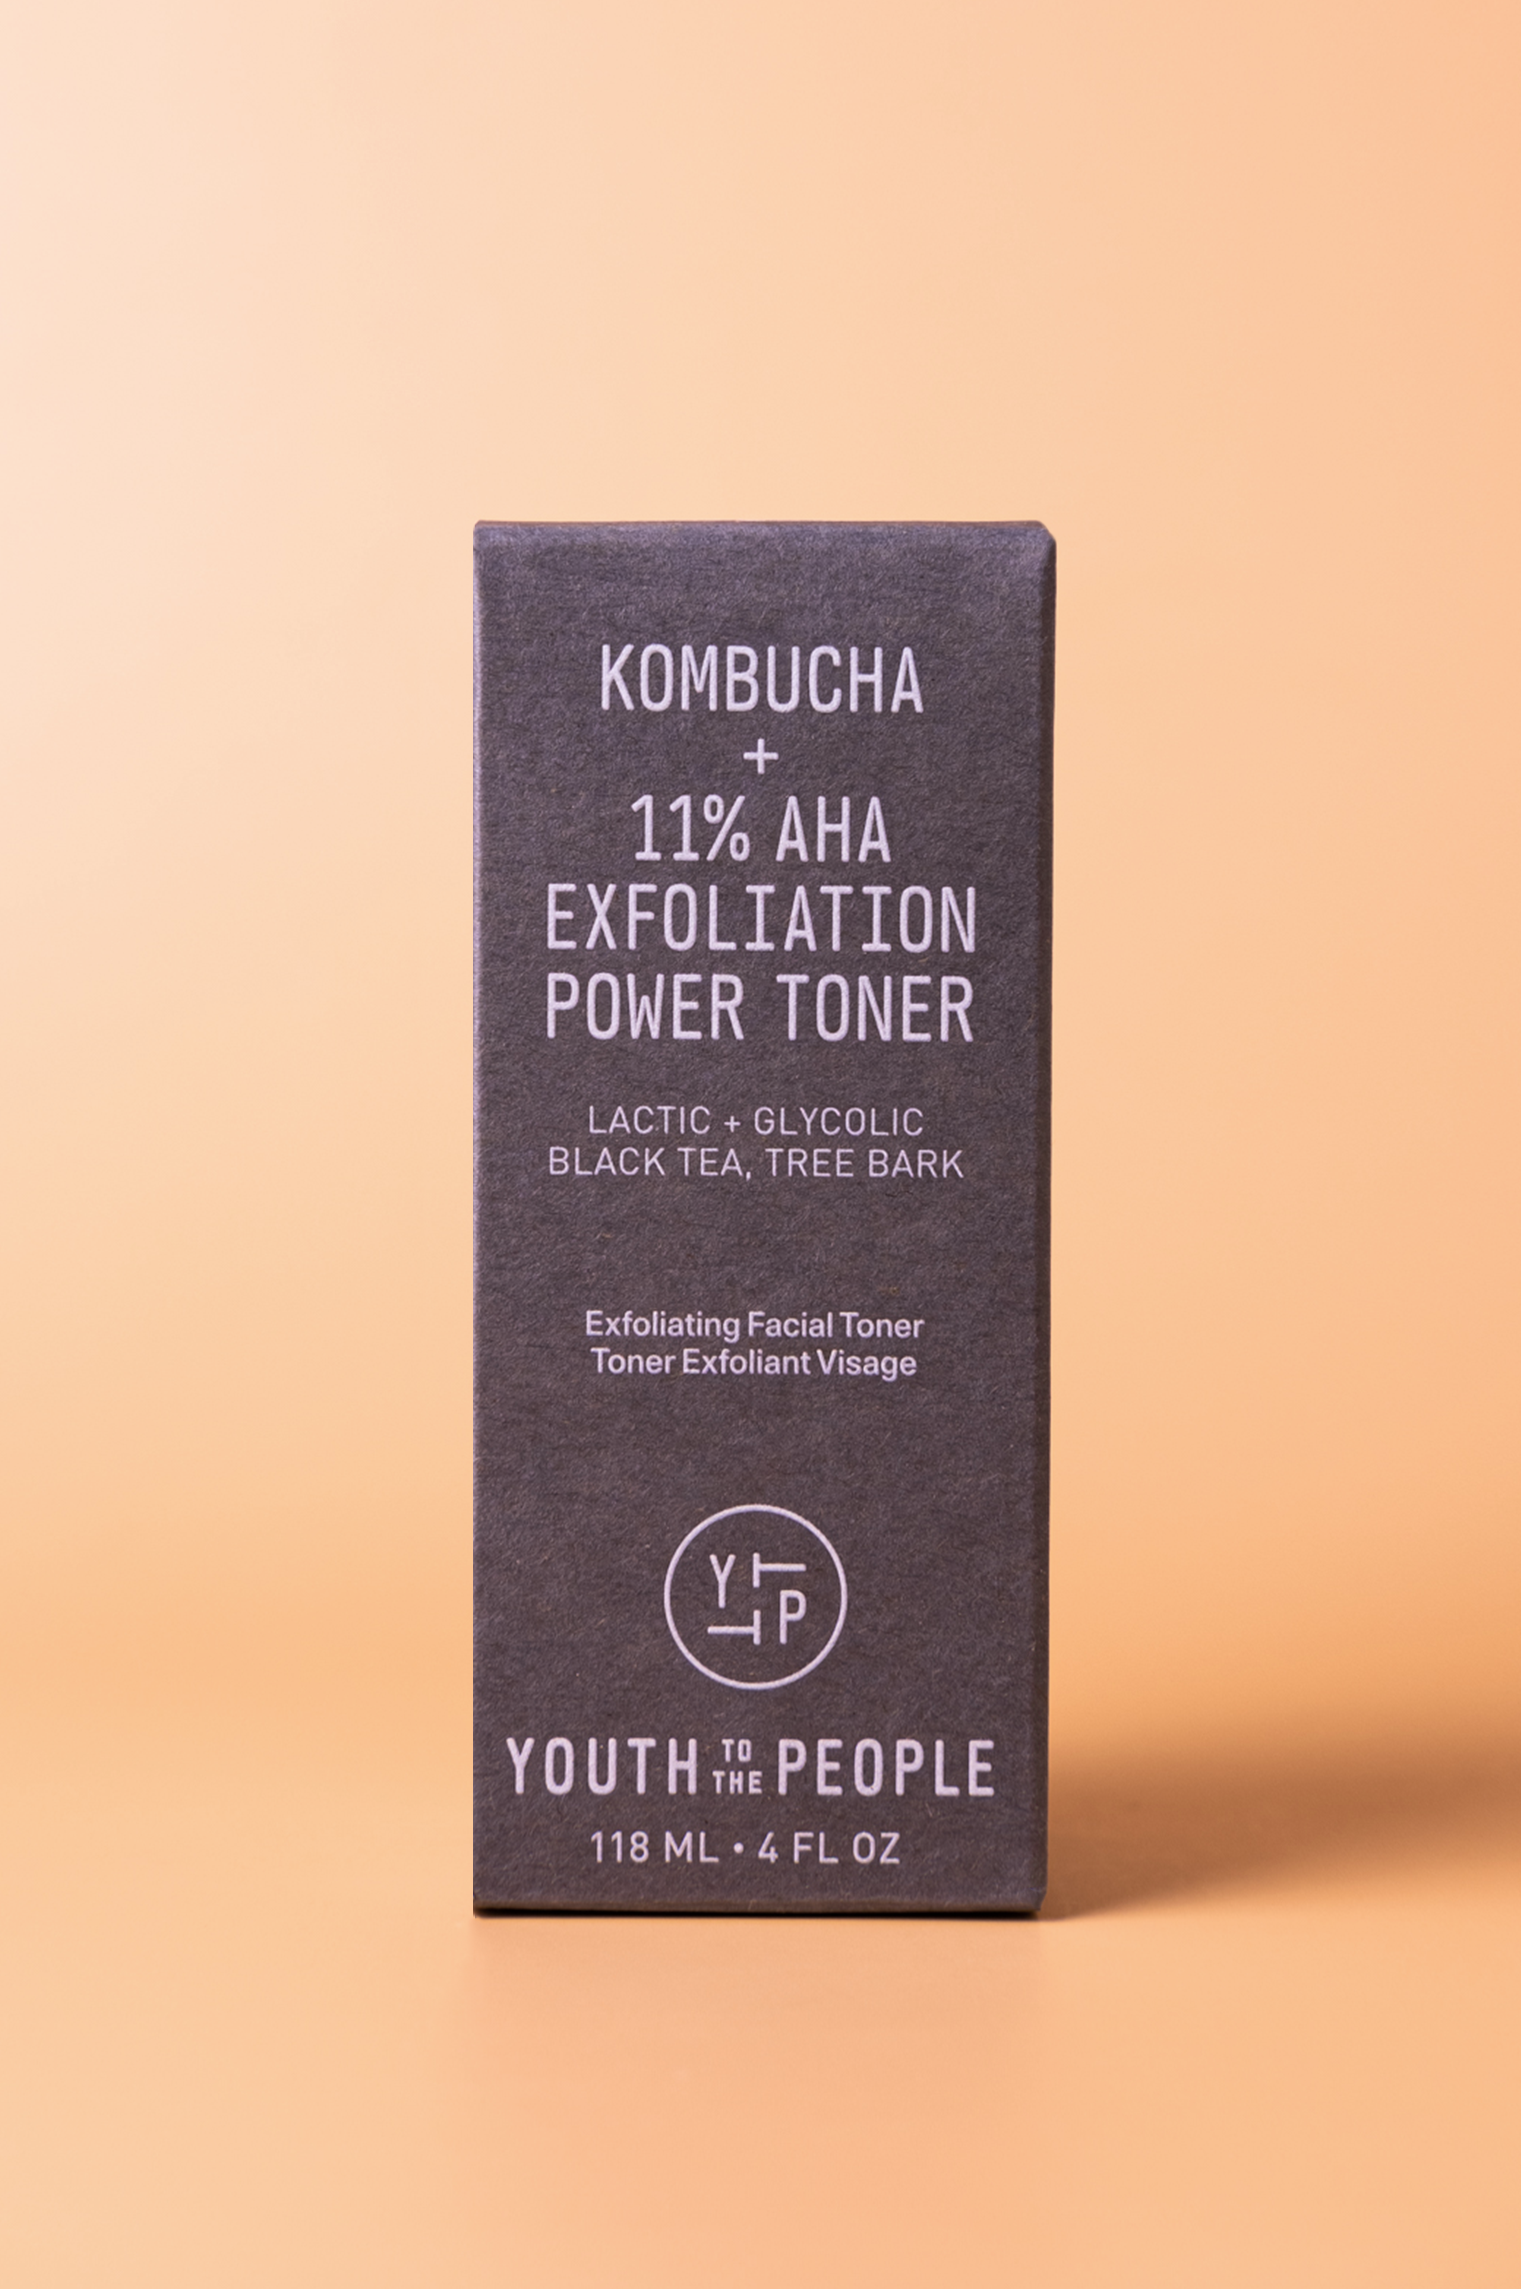 Kombucha + 11% AHA Exfoliation Power Toner